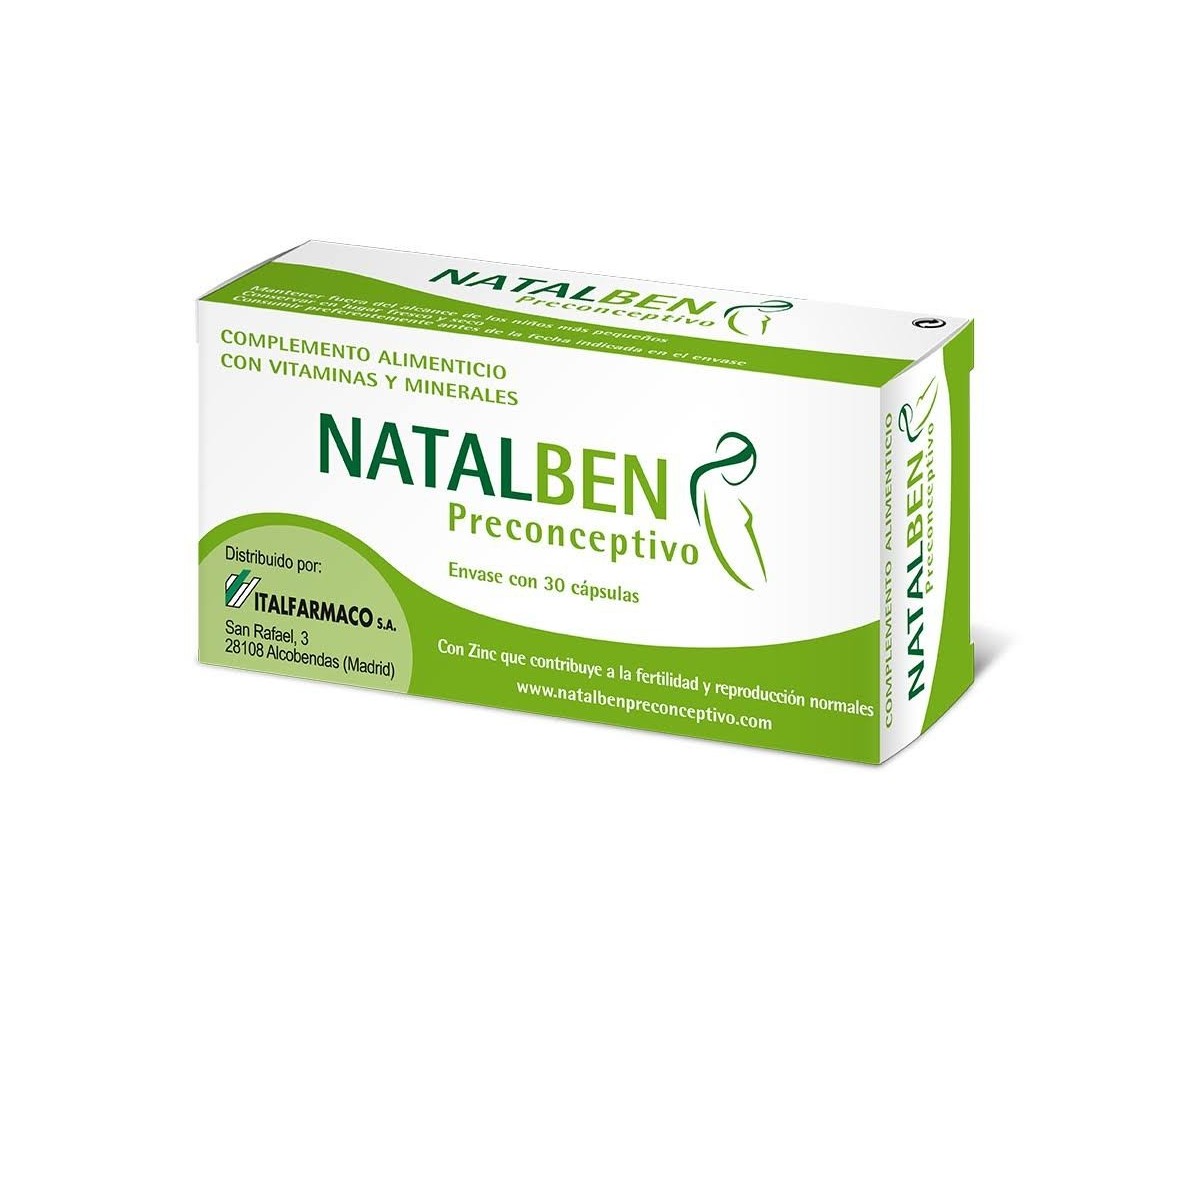 natalben preconceptivo 30 capsulas